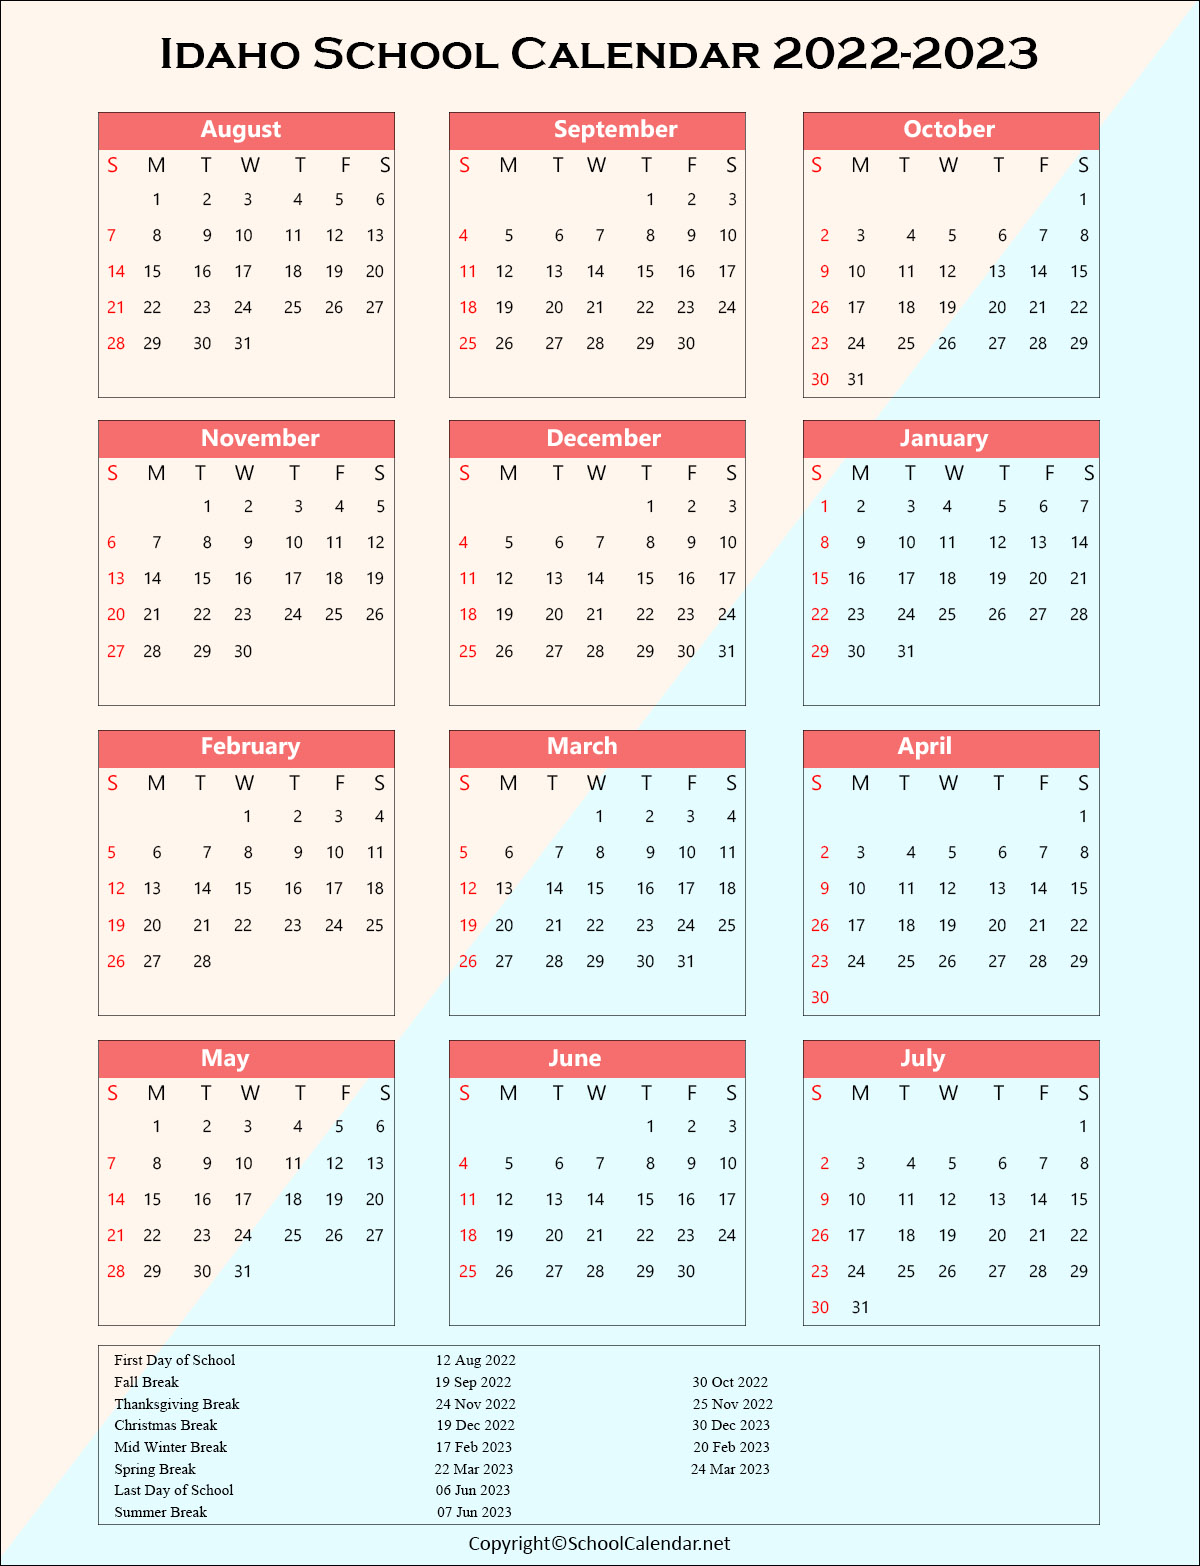 Idaho School Holiday Calendar 2022